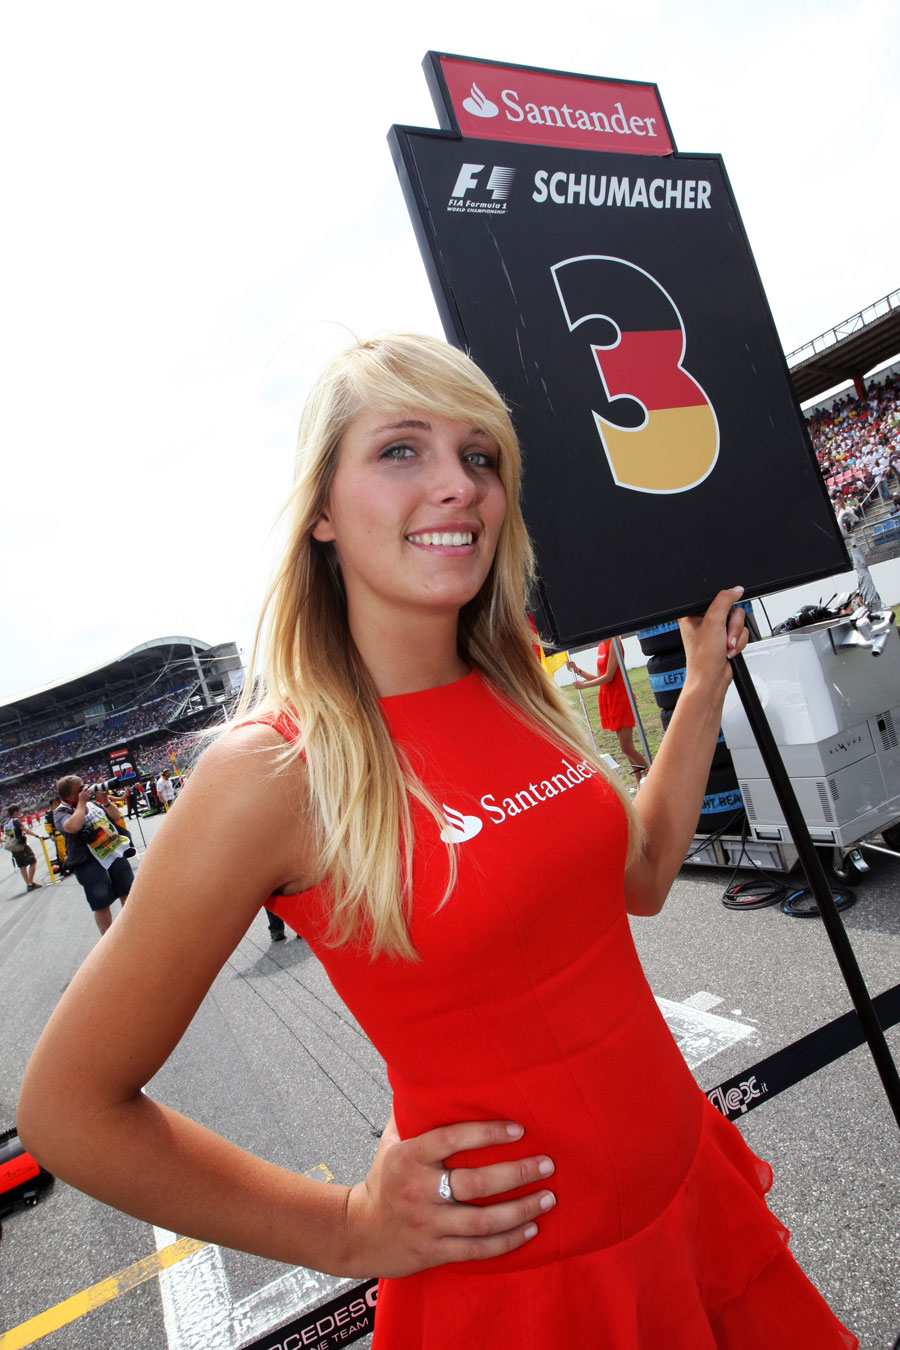 Michael Schumacher's grid girl